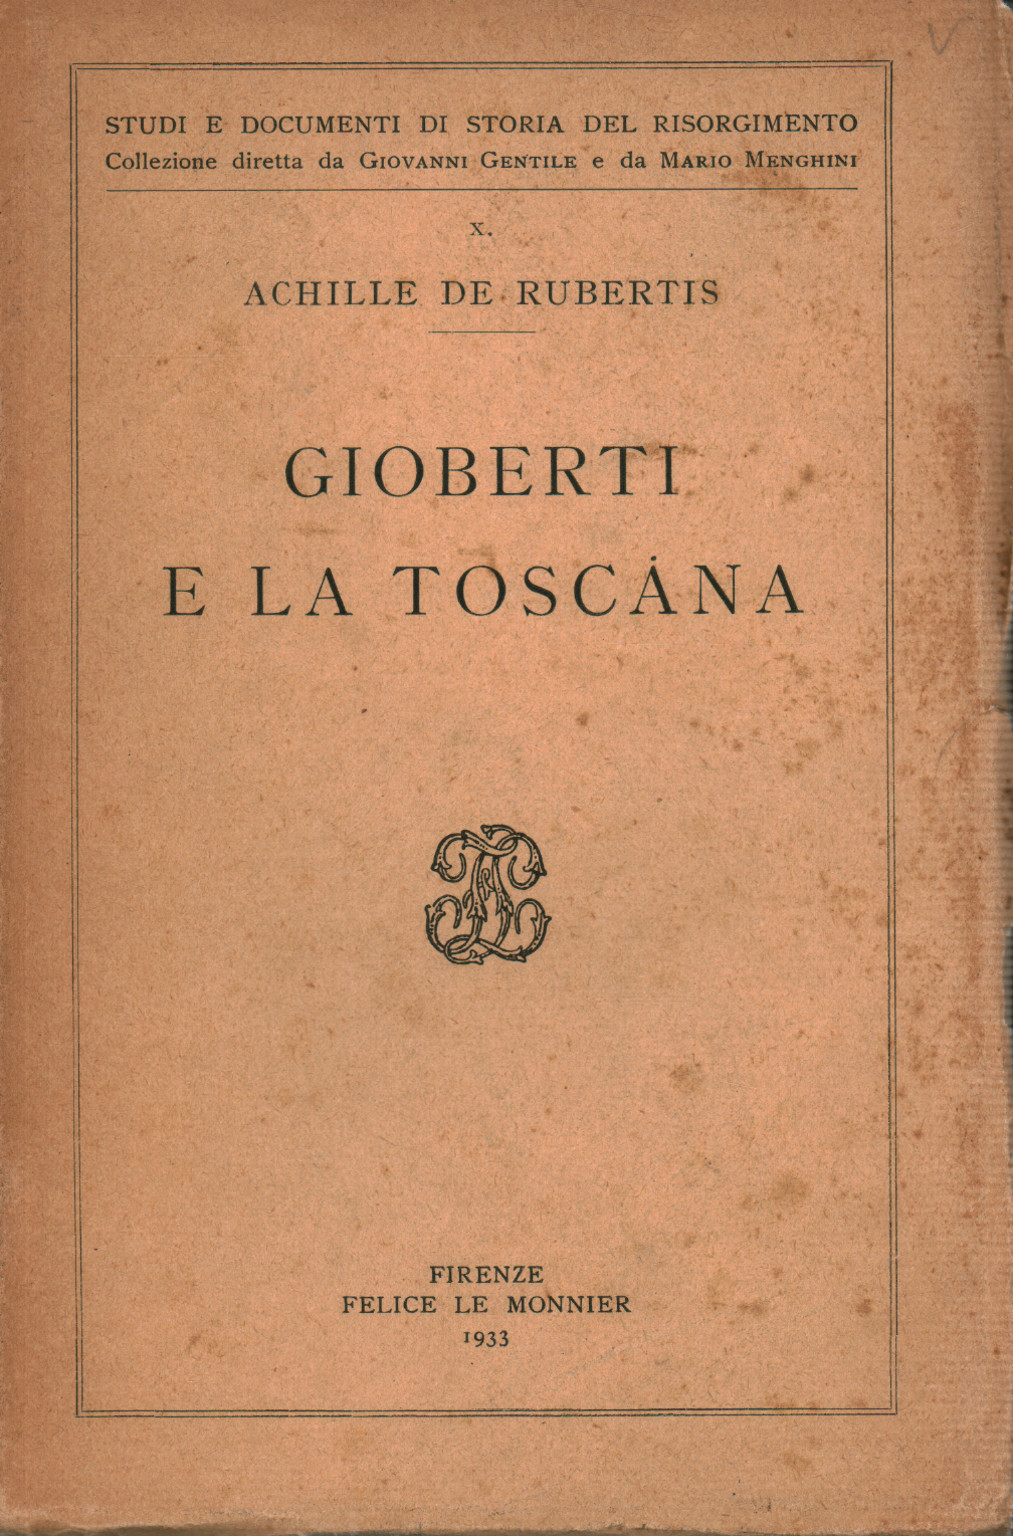 Gioberti and Tuscany, s.a.